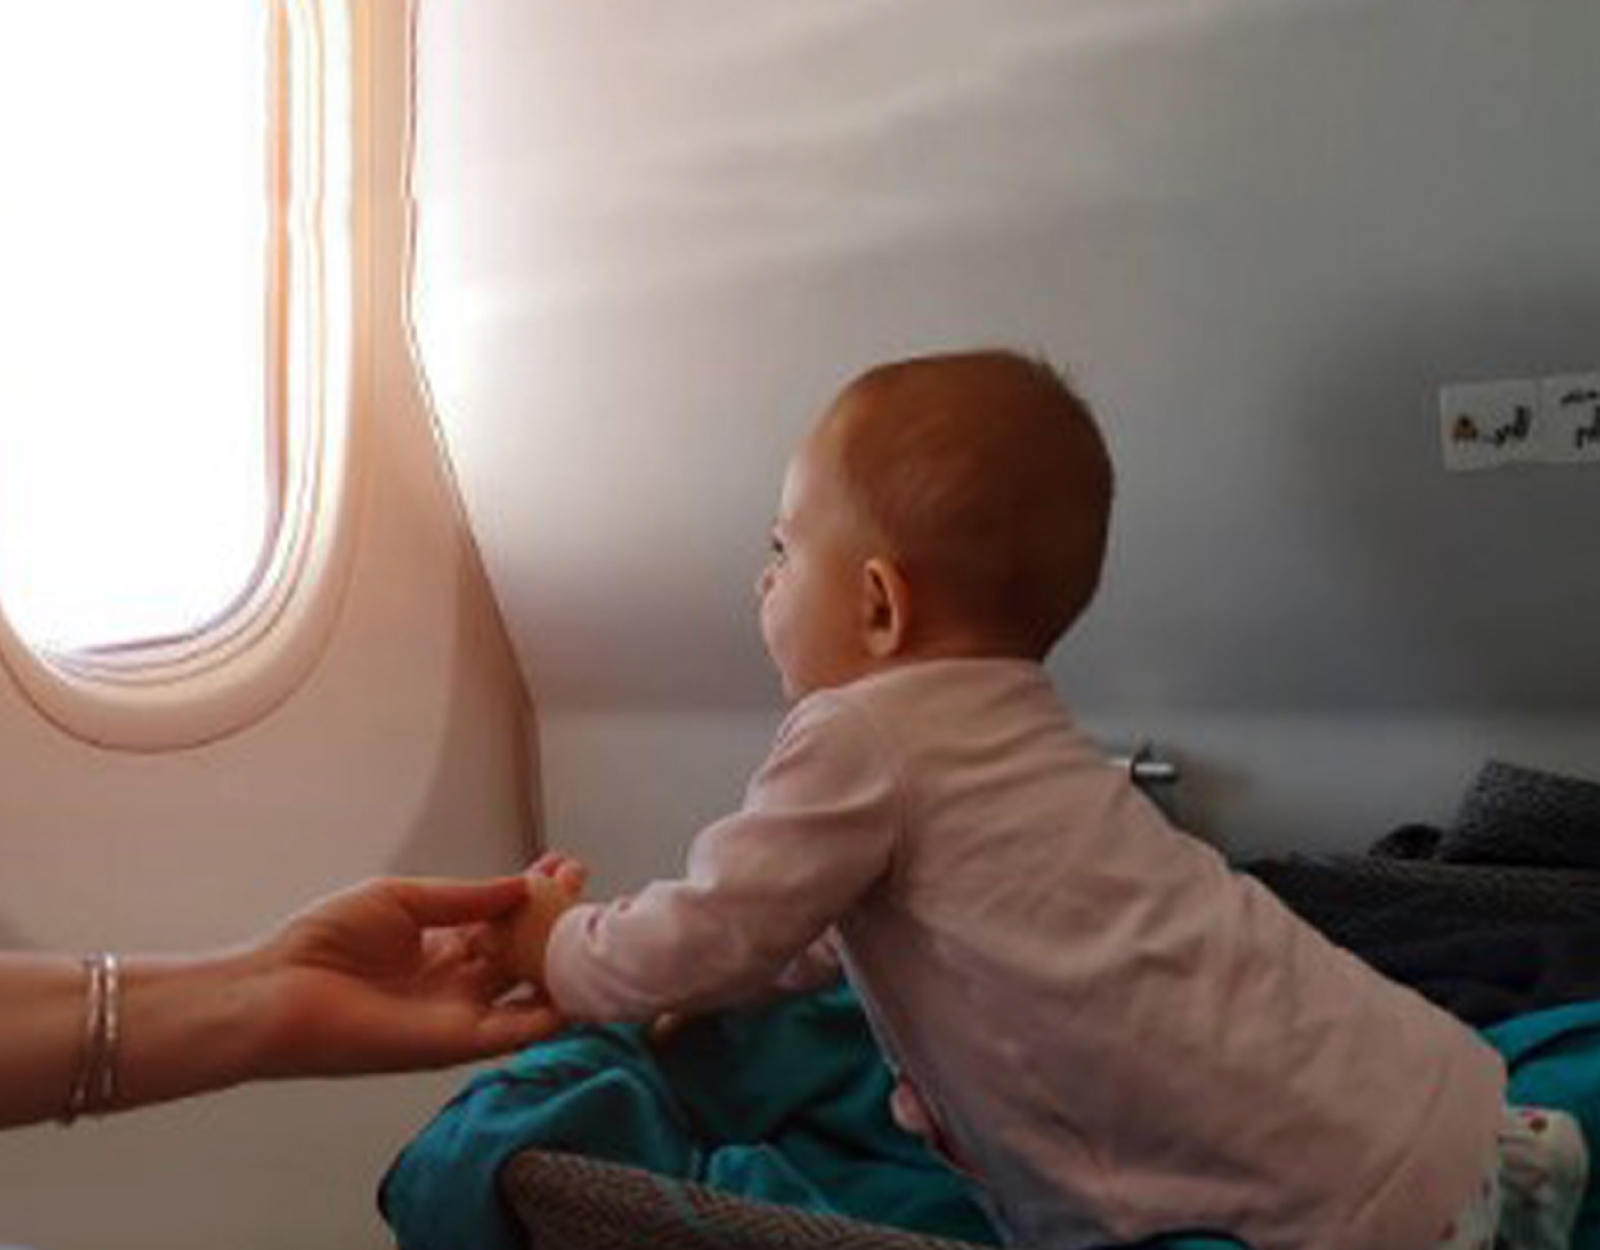 A baby inside a plane